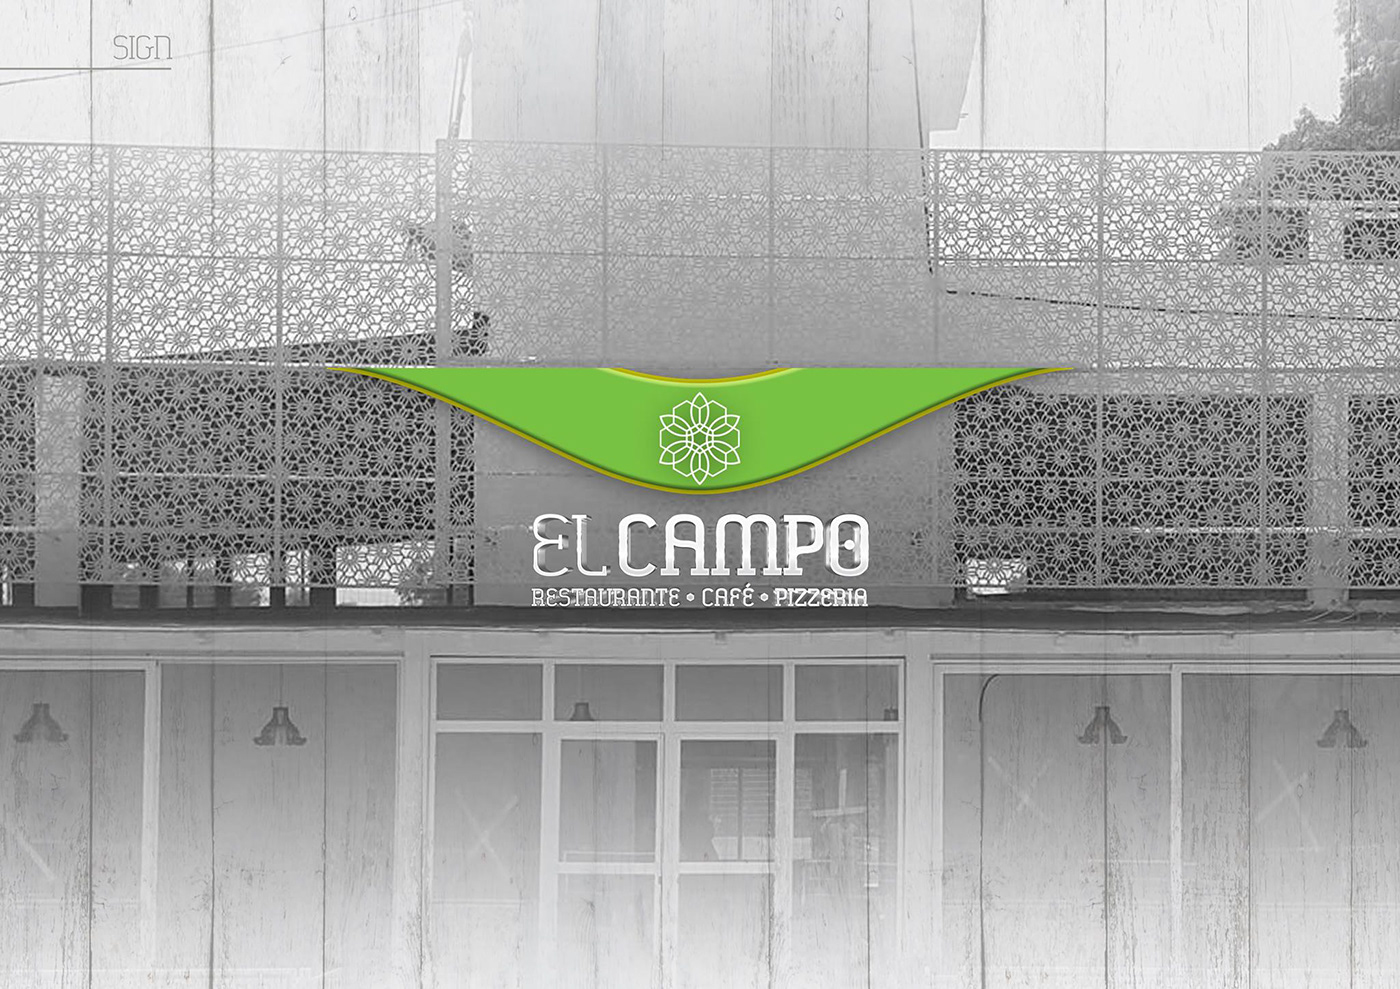 yassine hamdan tetouan football soccer logo El Campo restaurant